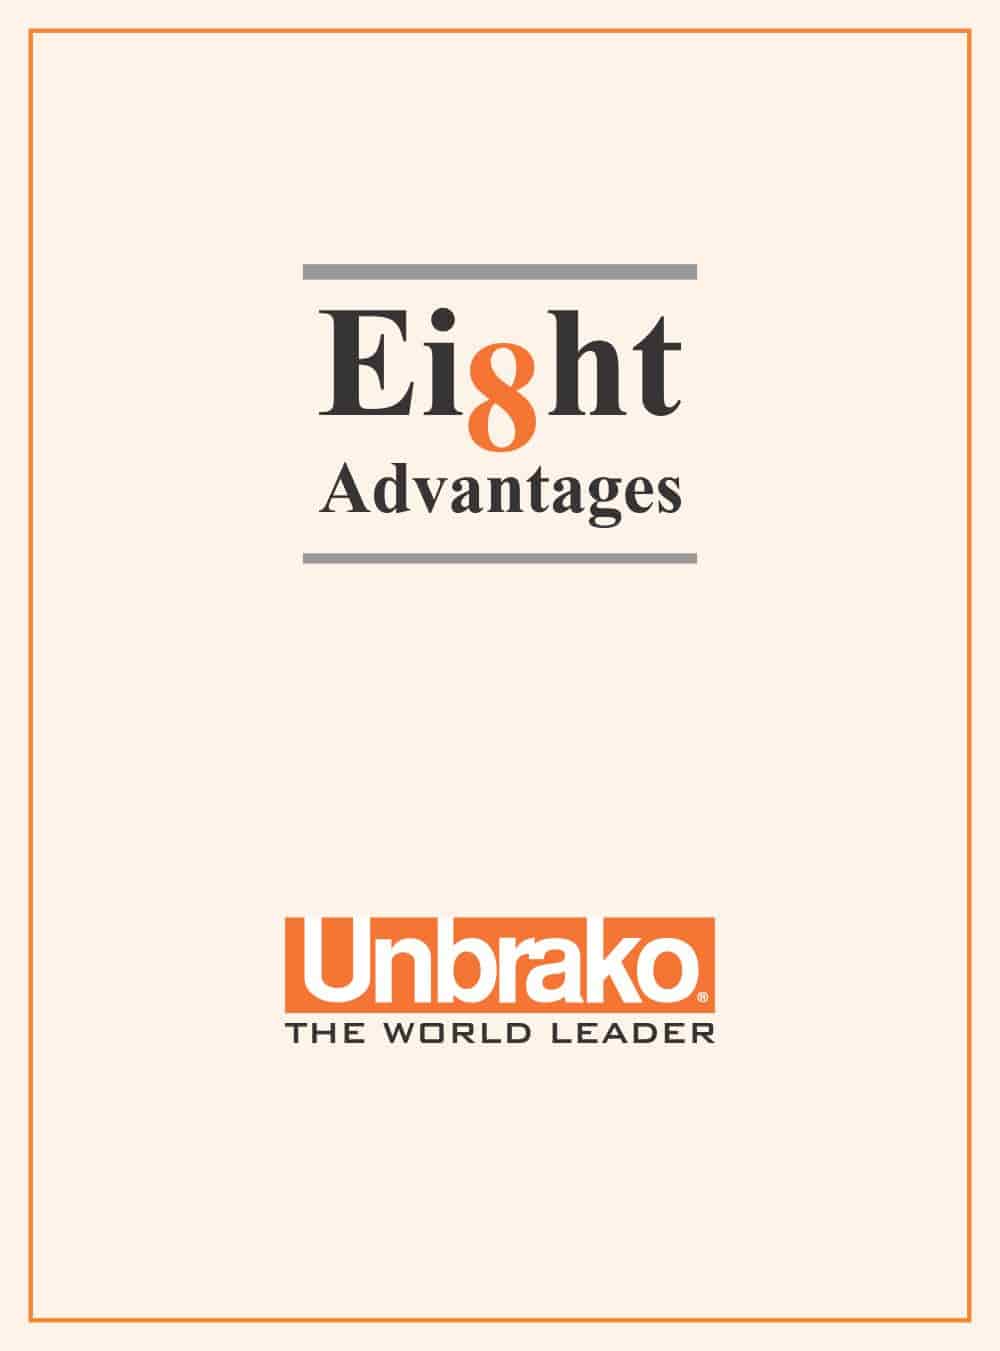 eight advantages of unbrako